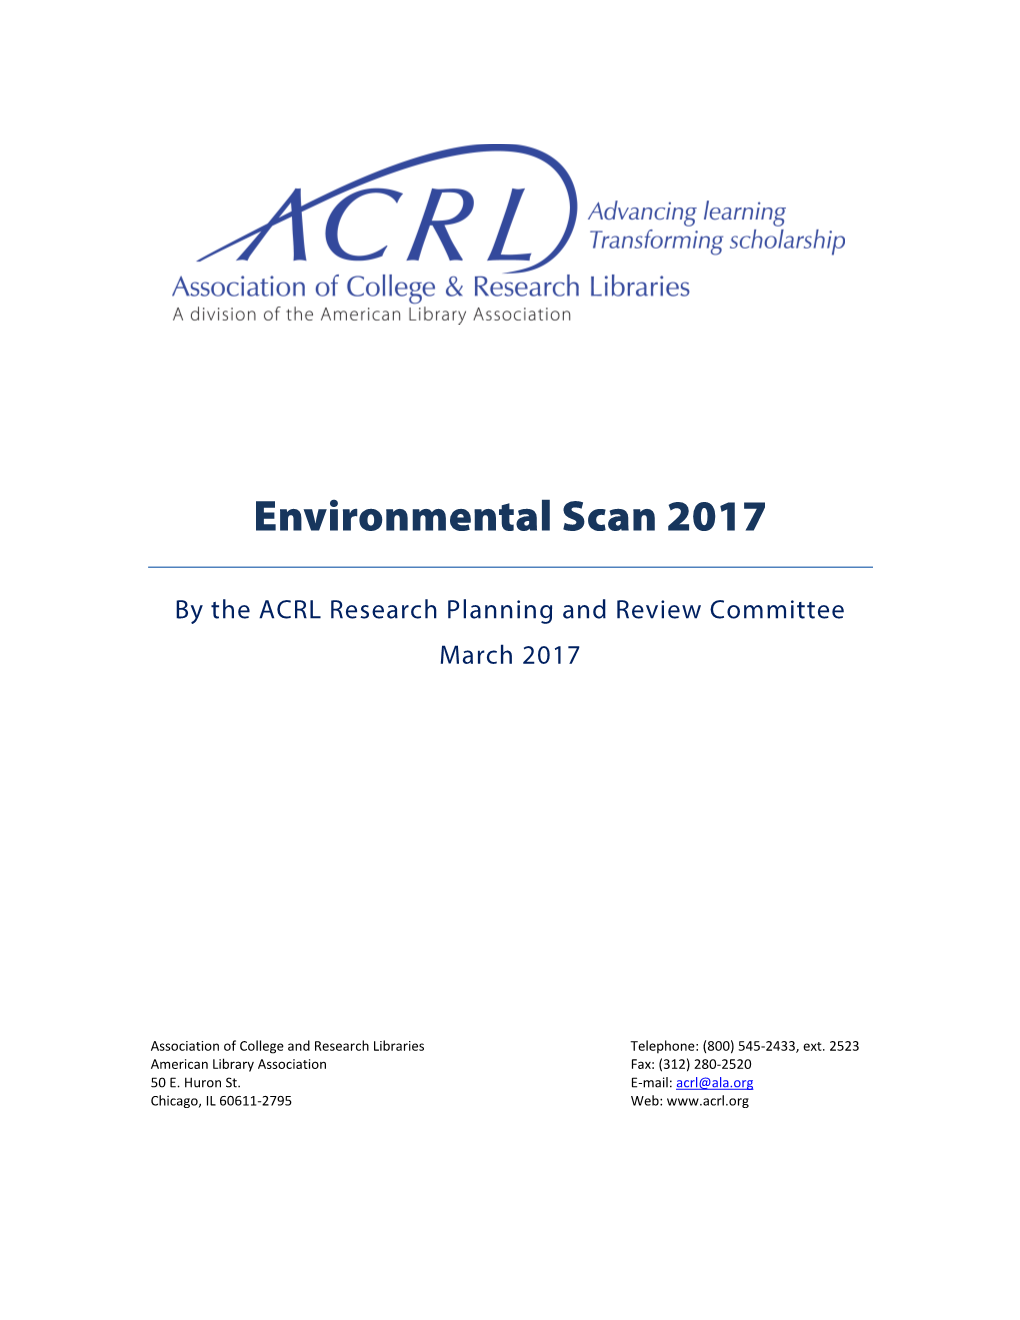 ACRL Environmental Scan 2017